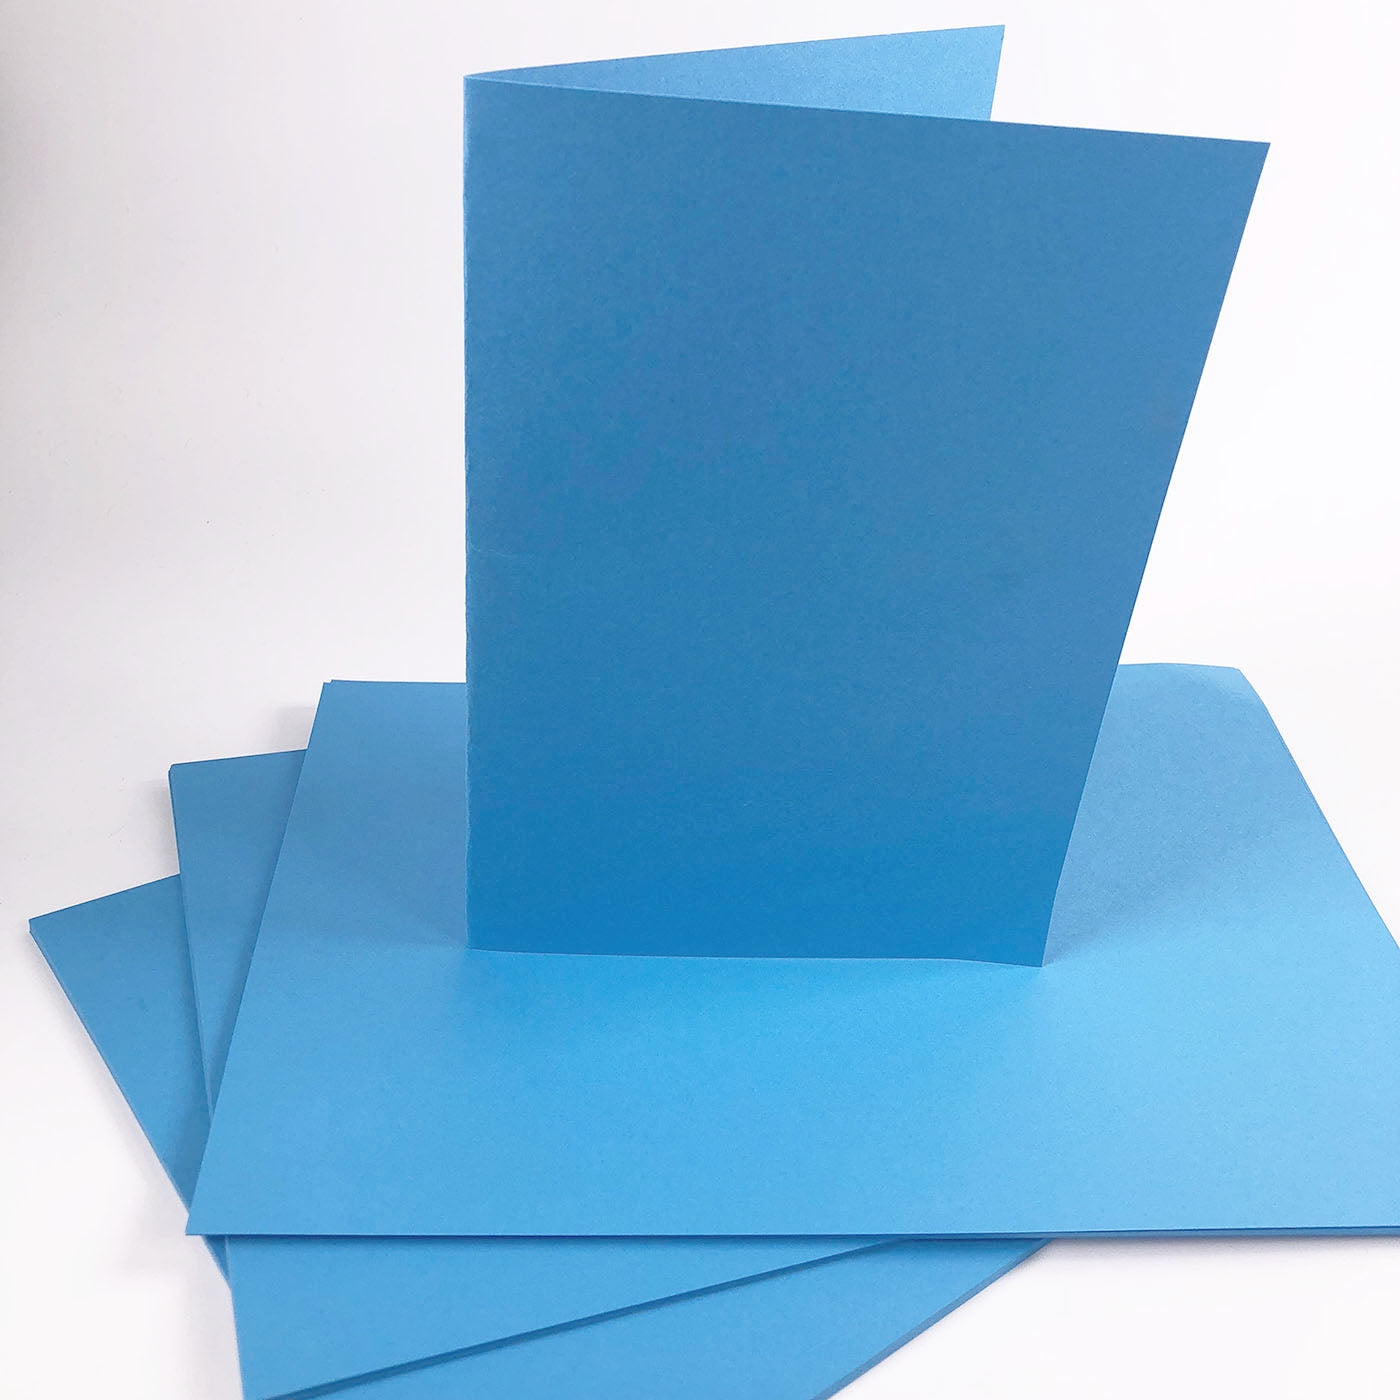 vibrant blue paper a4